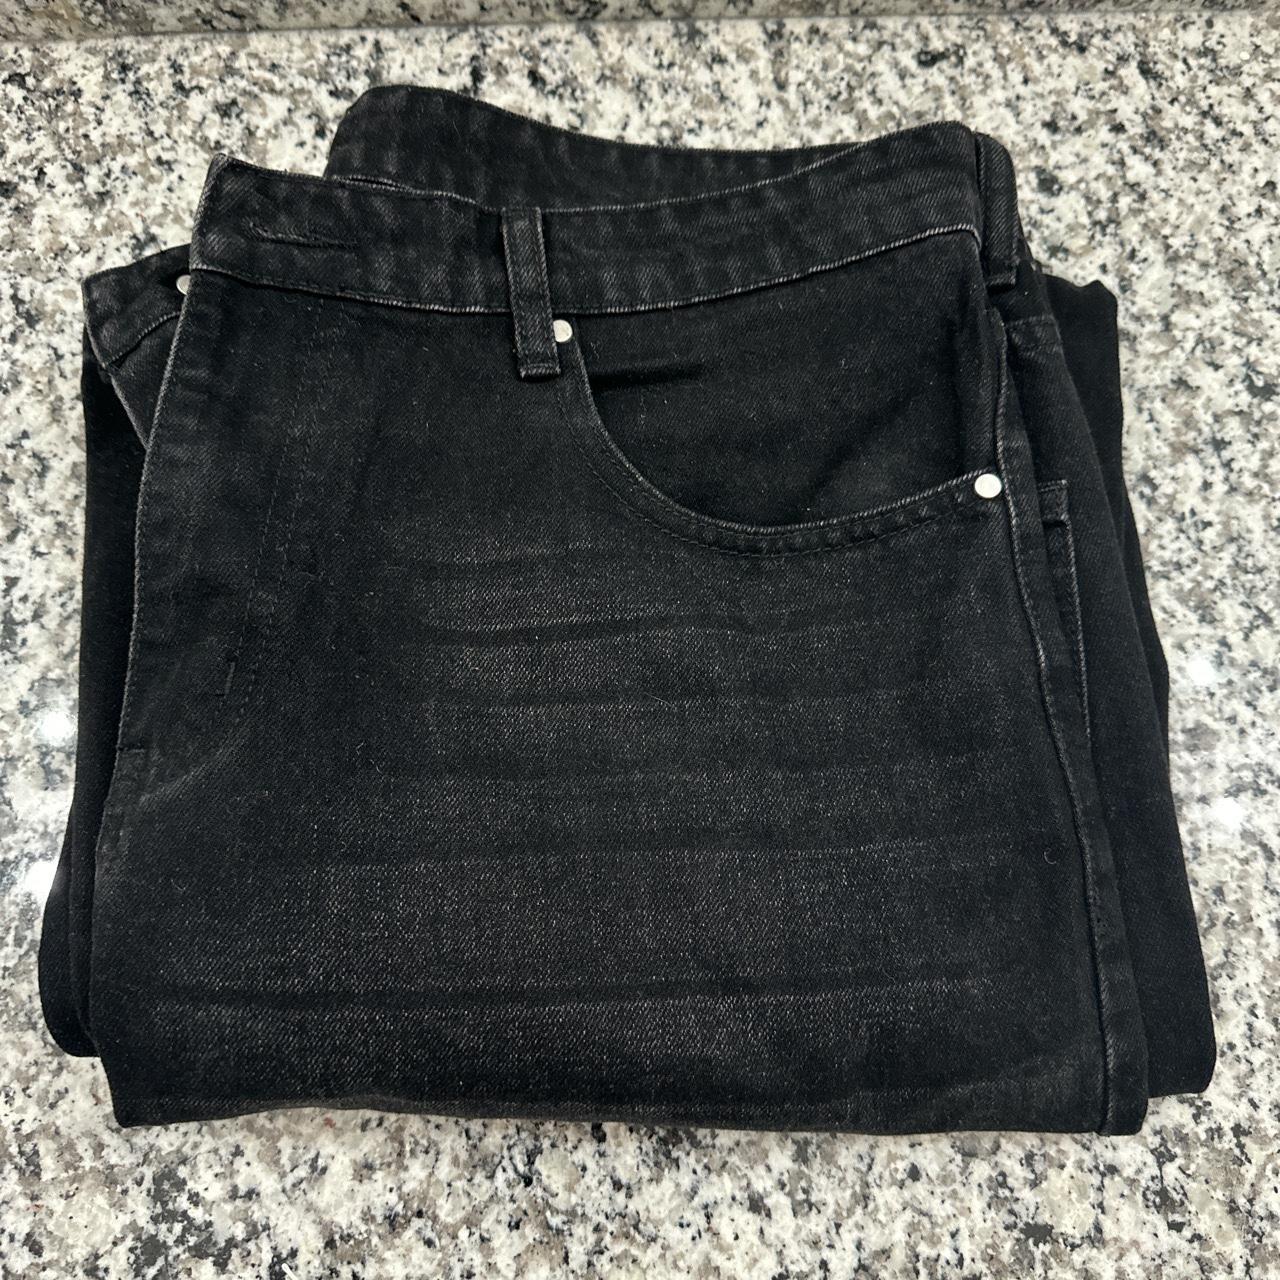 DOZZER Men Slim Fit Denim Jeans Plain Bottom Wear Black and Blue (Size_32)  : Amazon.in: Fashion